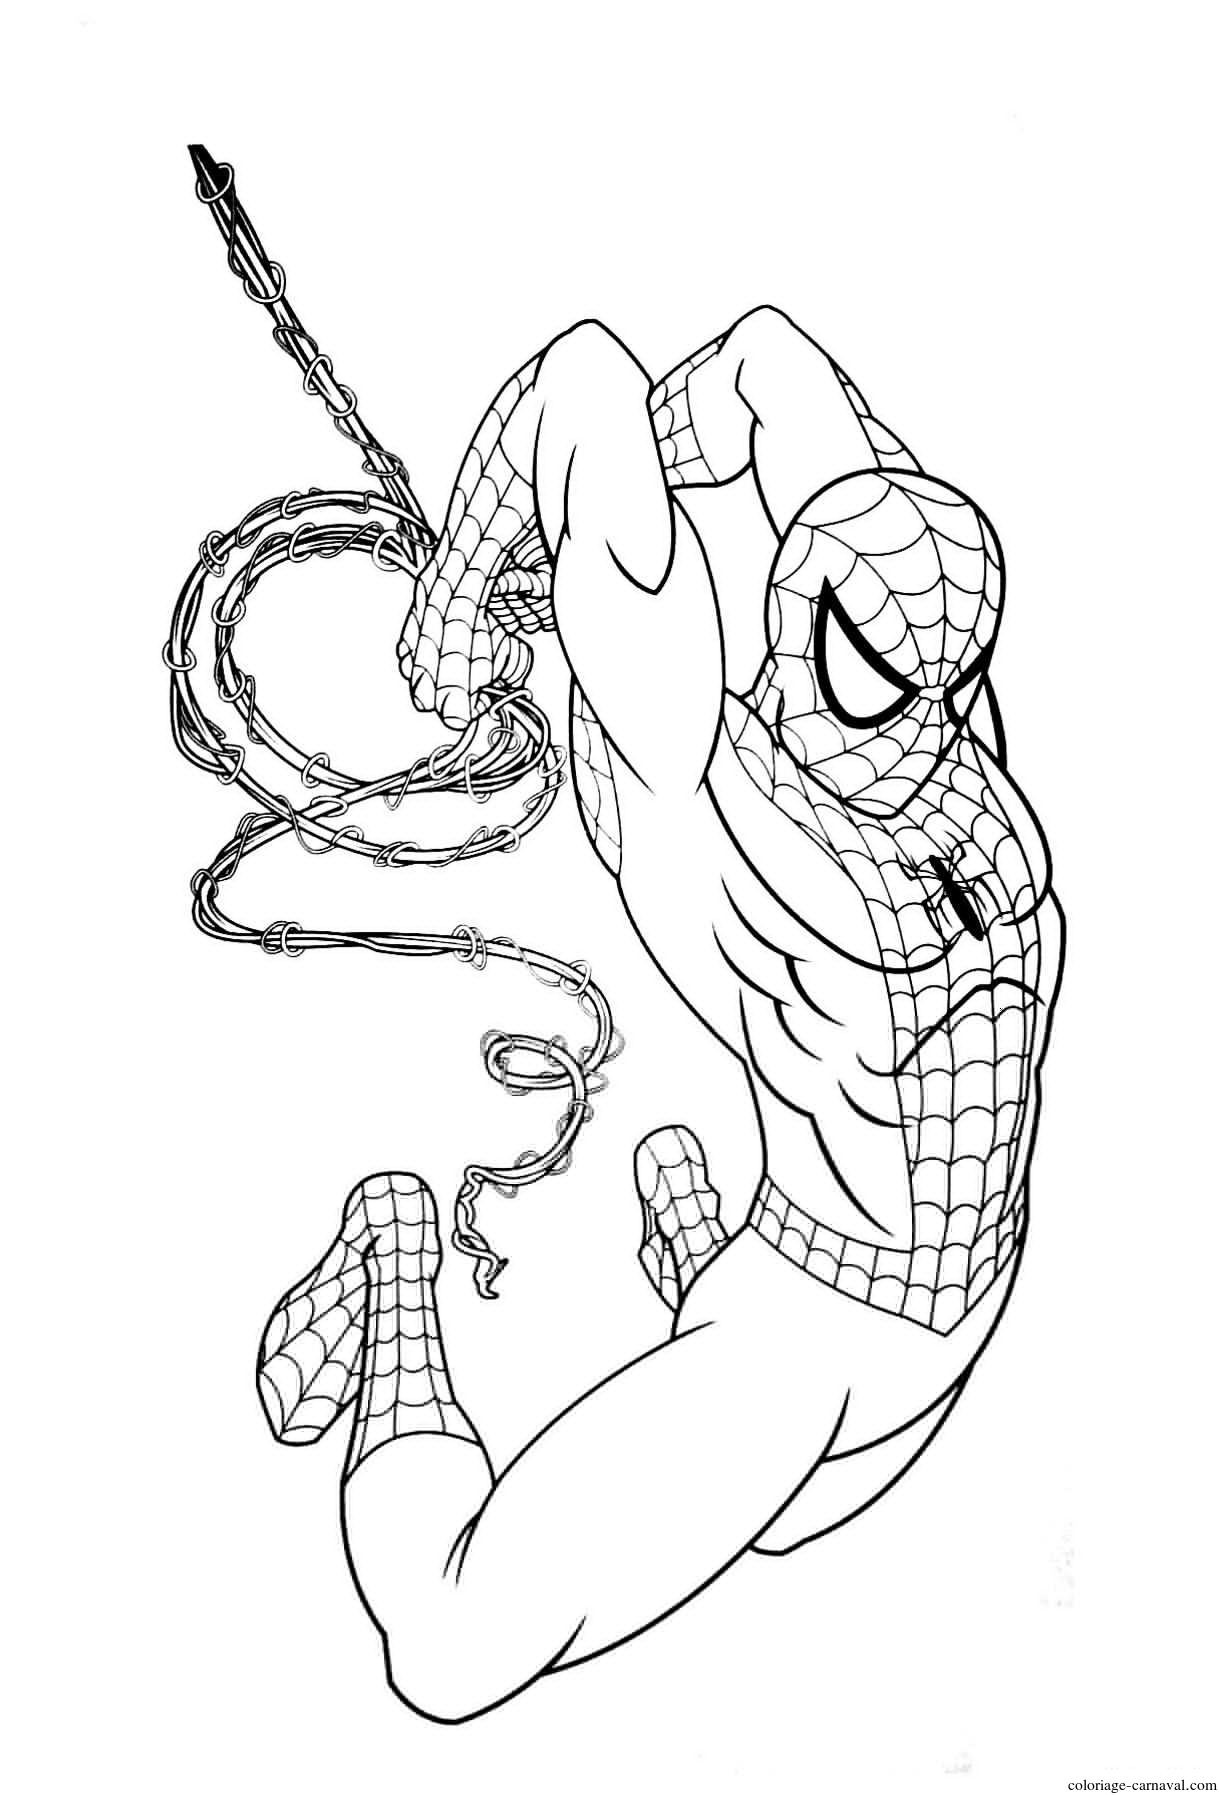 Coloriage Spiderman 129 Dessin Gratuit - Coloriage Carnaval avec Coloriage Spider Man